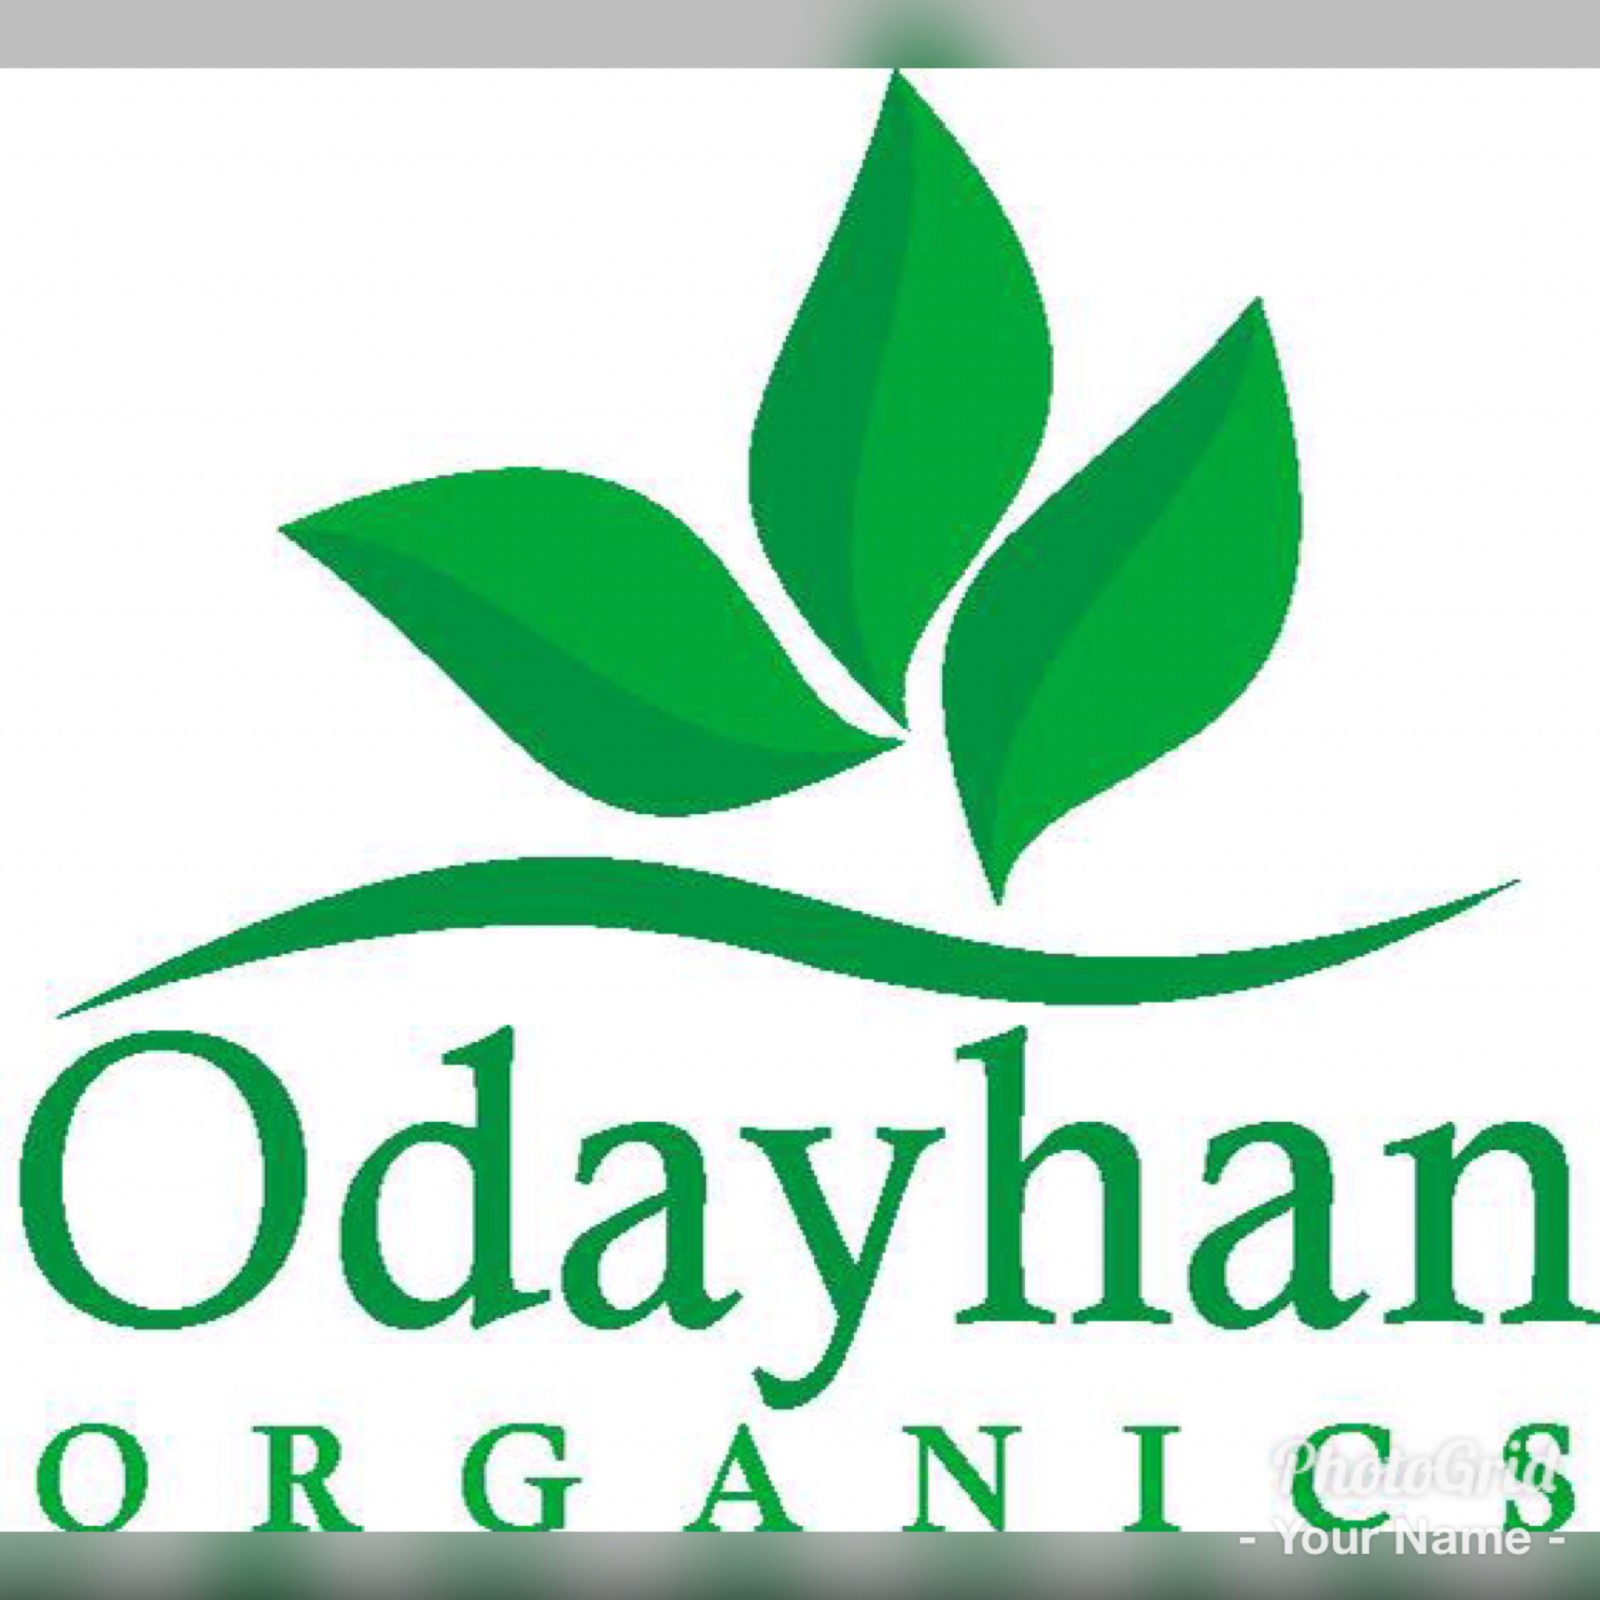 Odayhanorganics Coconut oil